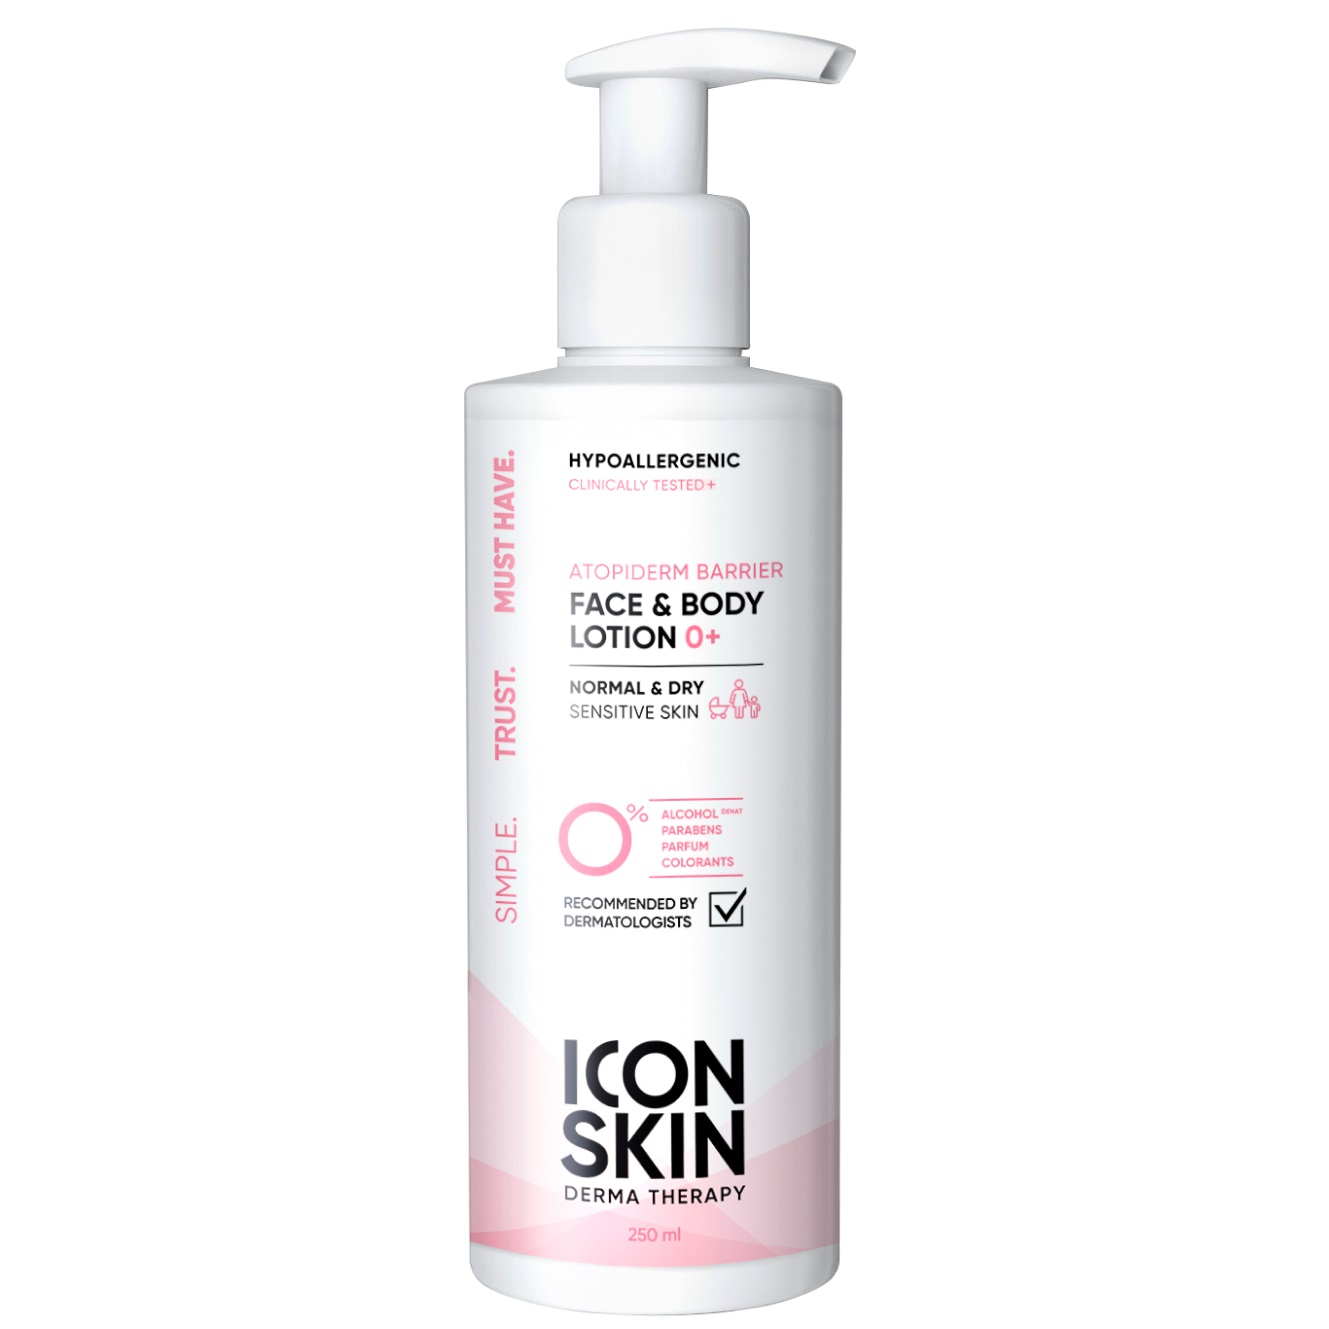 Icon Skin Липидовосстанавливающий лосьон для сухой атопичной кожи AtopiDerm Barrier 0+, 250 мл (Icon Skin, Derma Therapy)